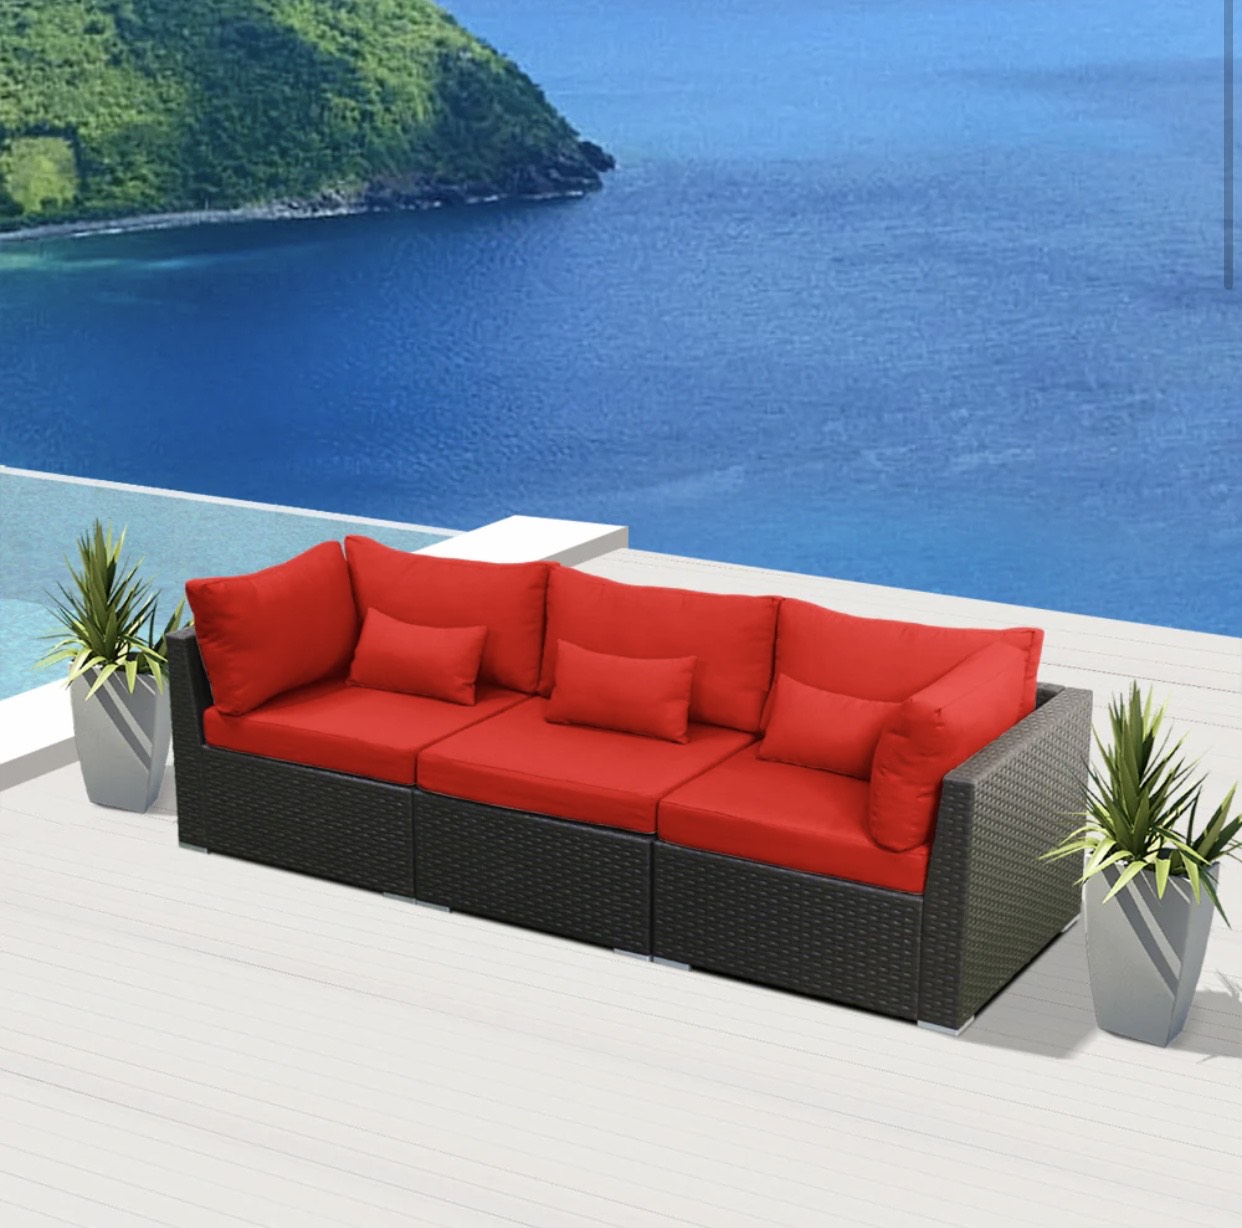 Crimson Red Outdoor Modern Patio Wicker Furniture Sofa Set Sunset Beach 3 Three Piece